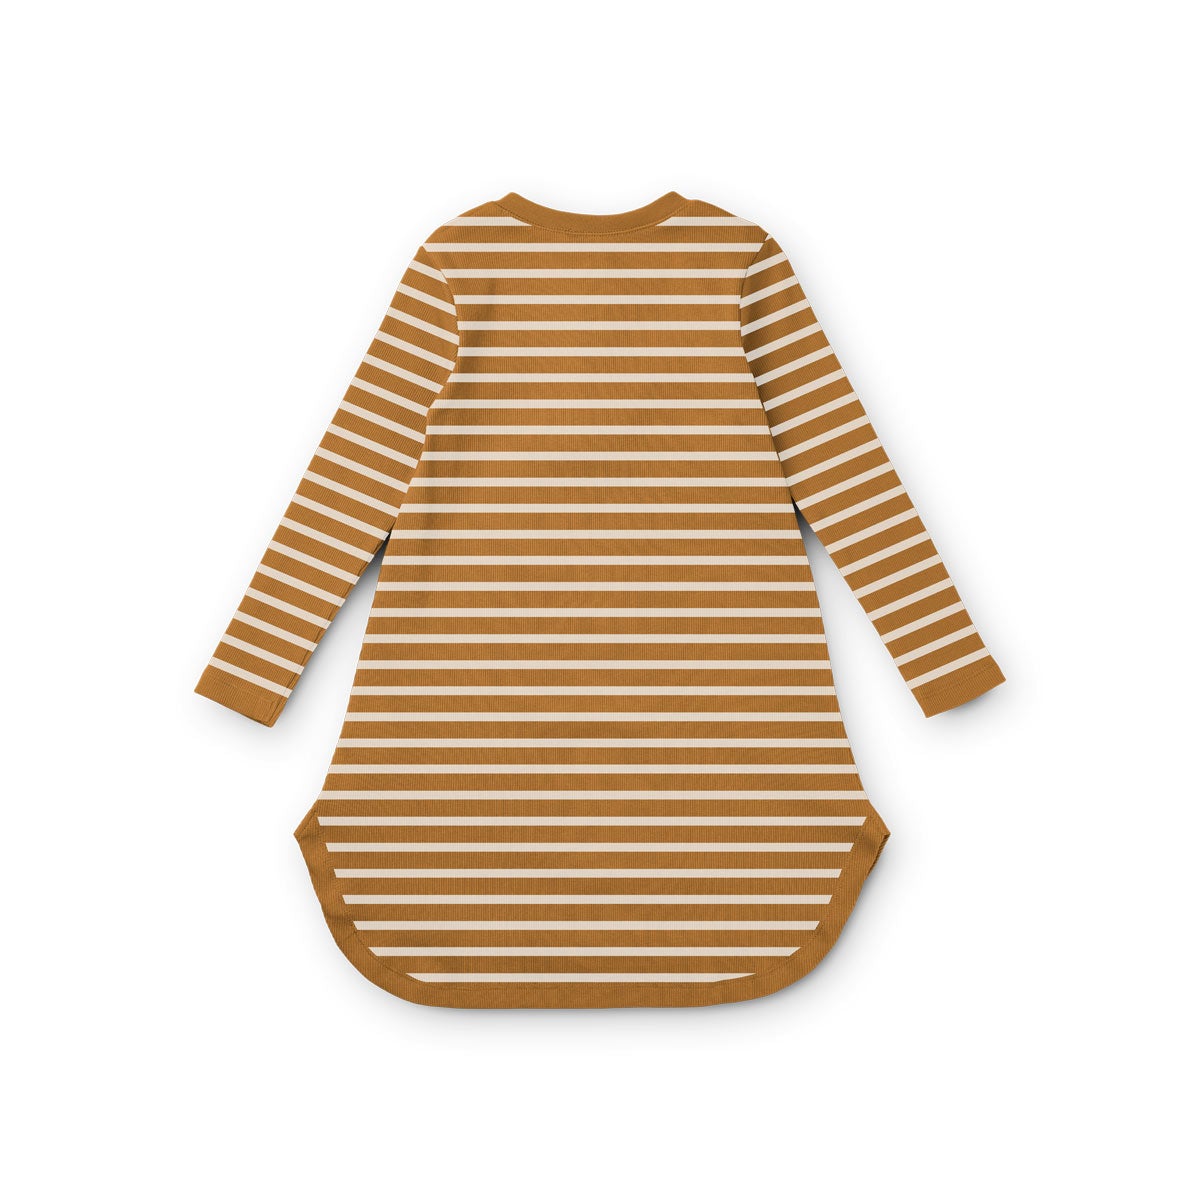 Alva Nightgown - Y/D Stripe: Golden caramel / Sandy